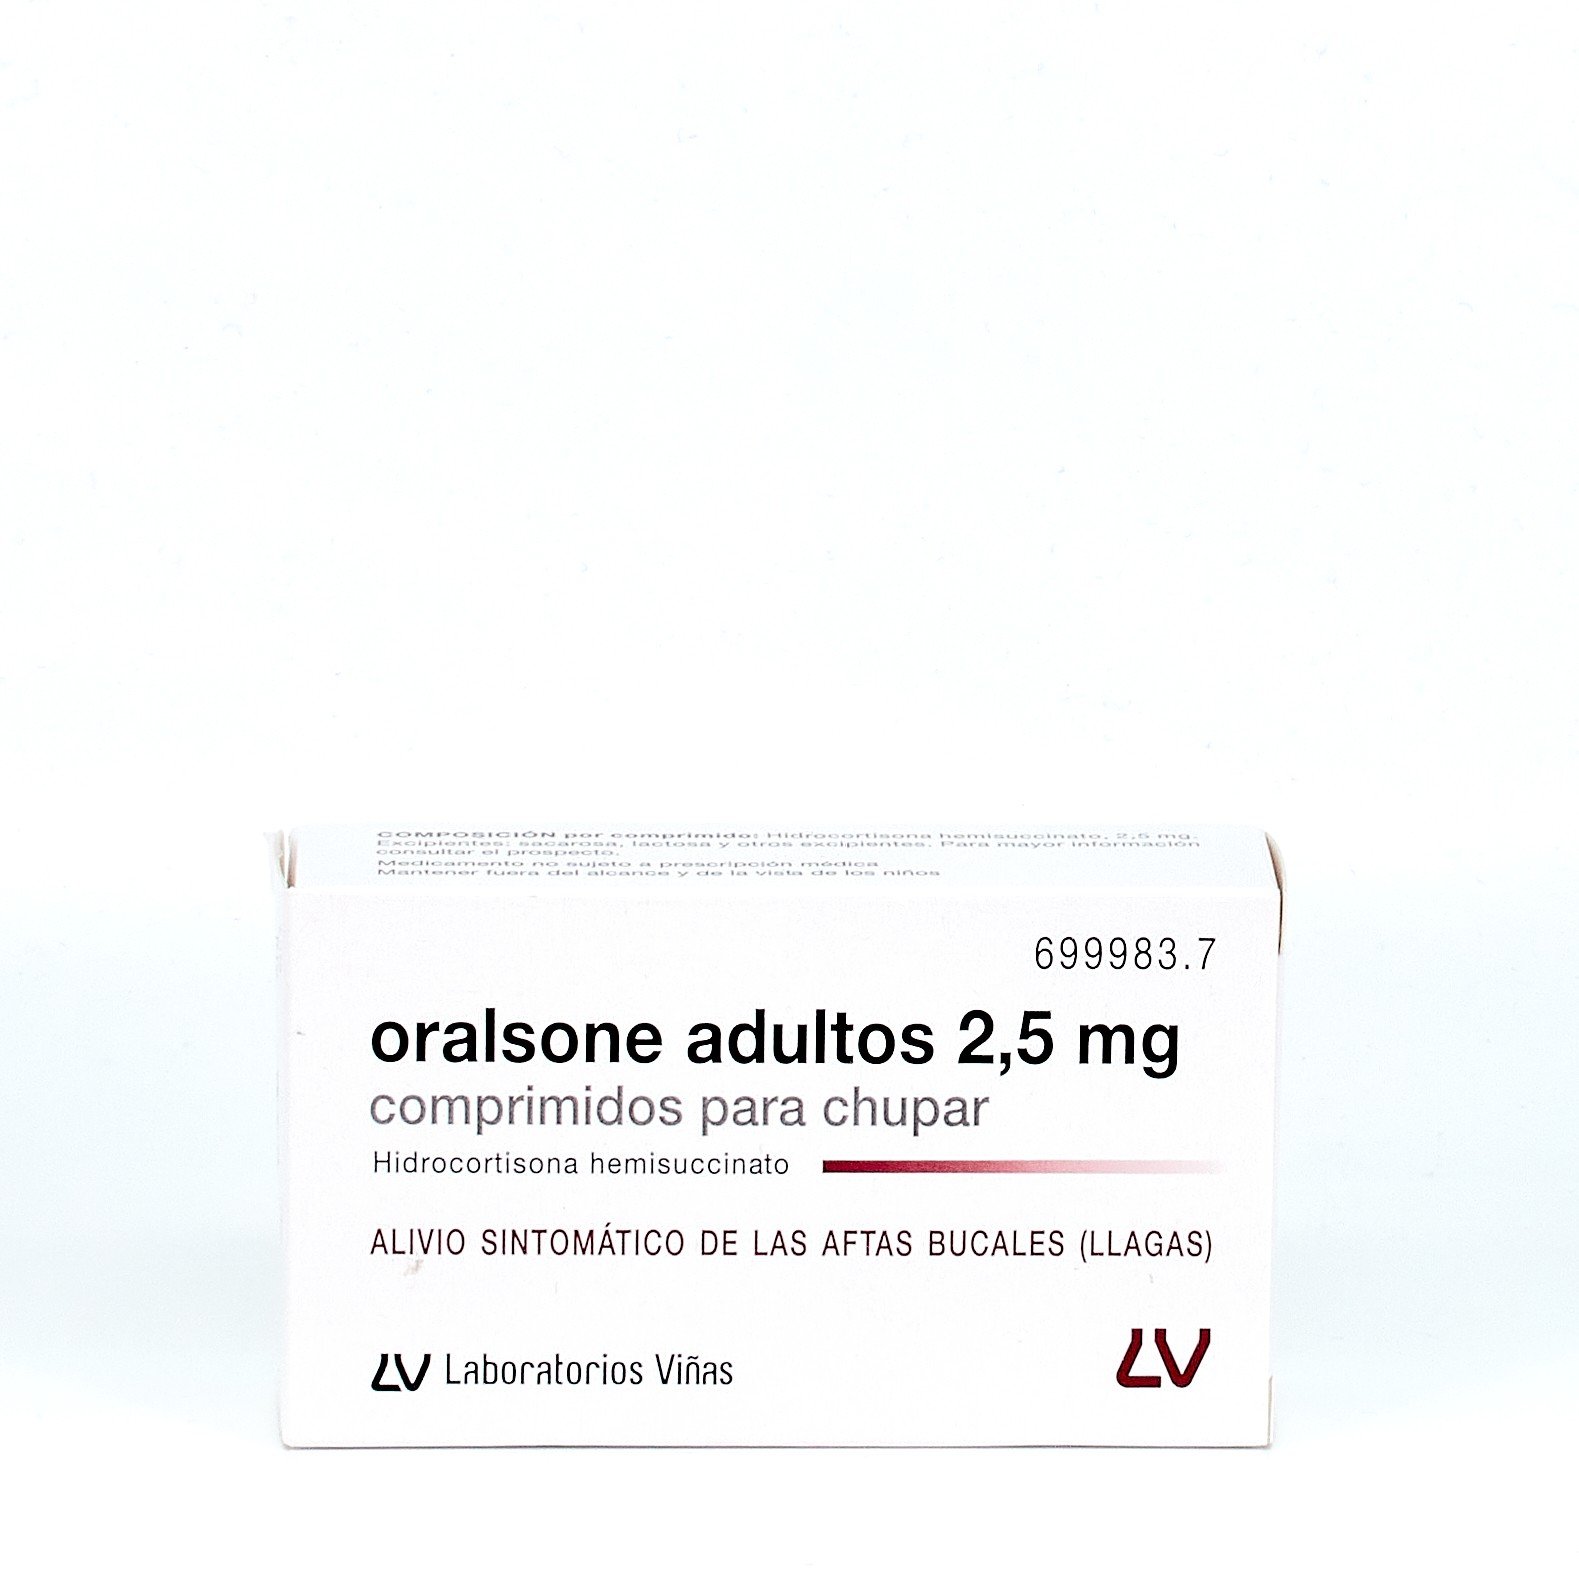 Oralsone adultos 2,5 mg